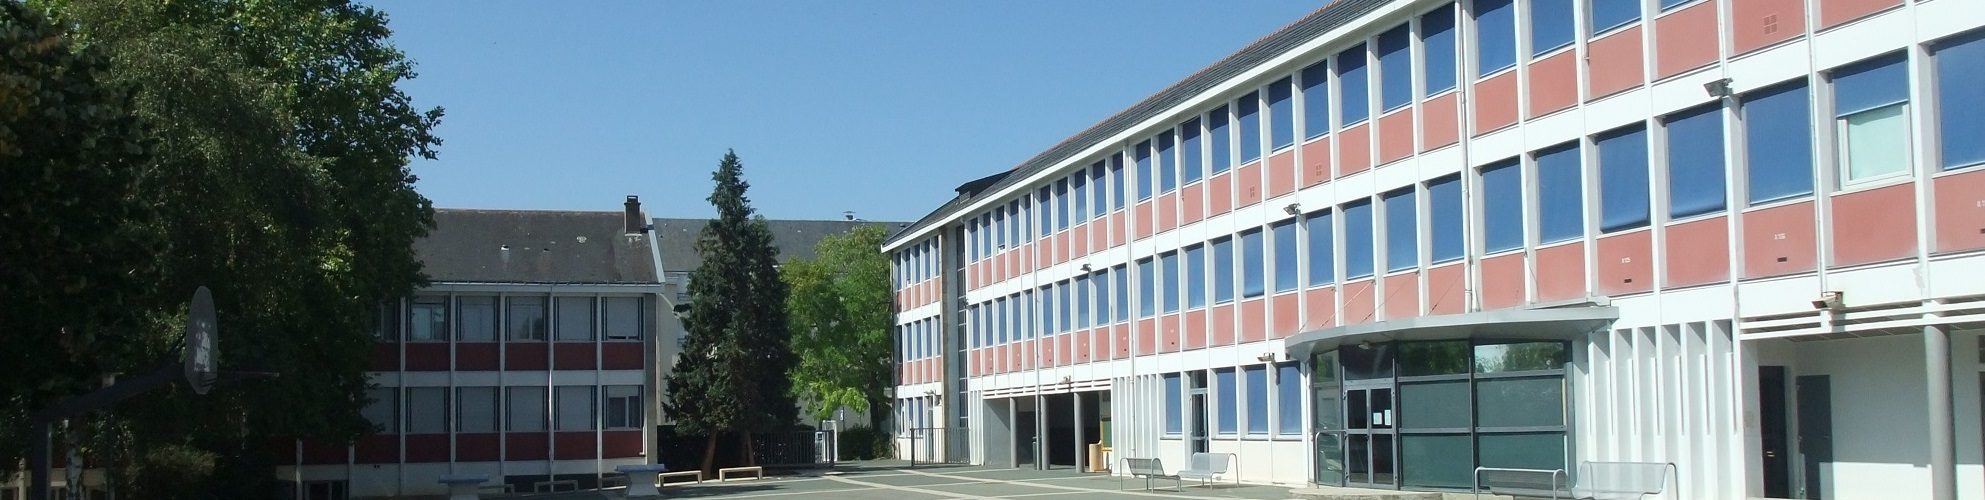 Collège Jean Zay  Collège  Montreuil Juigne